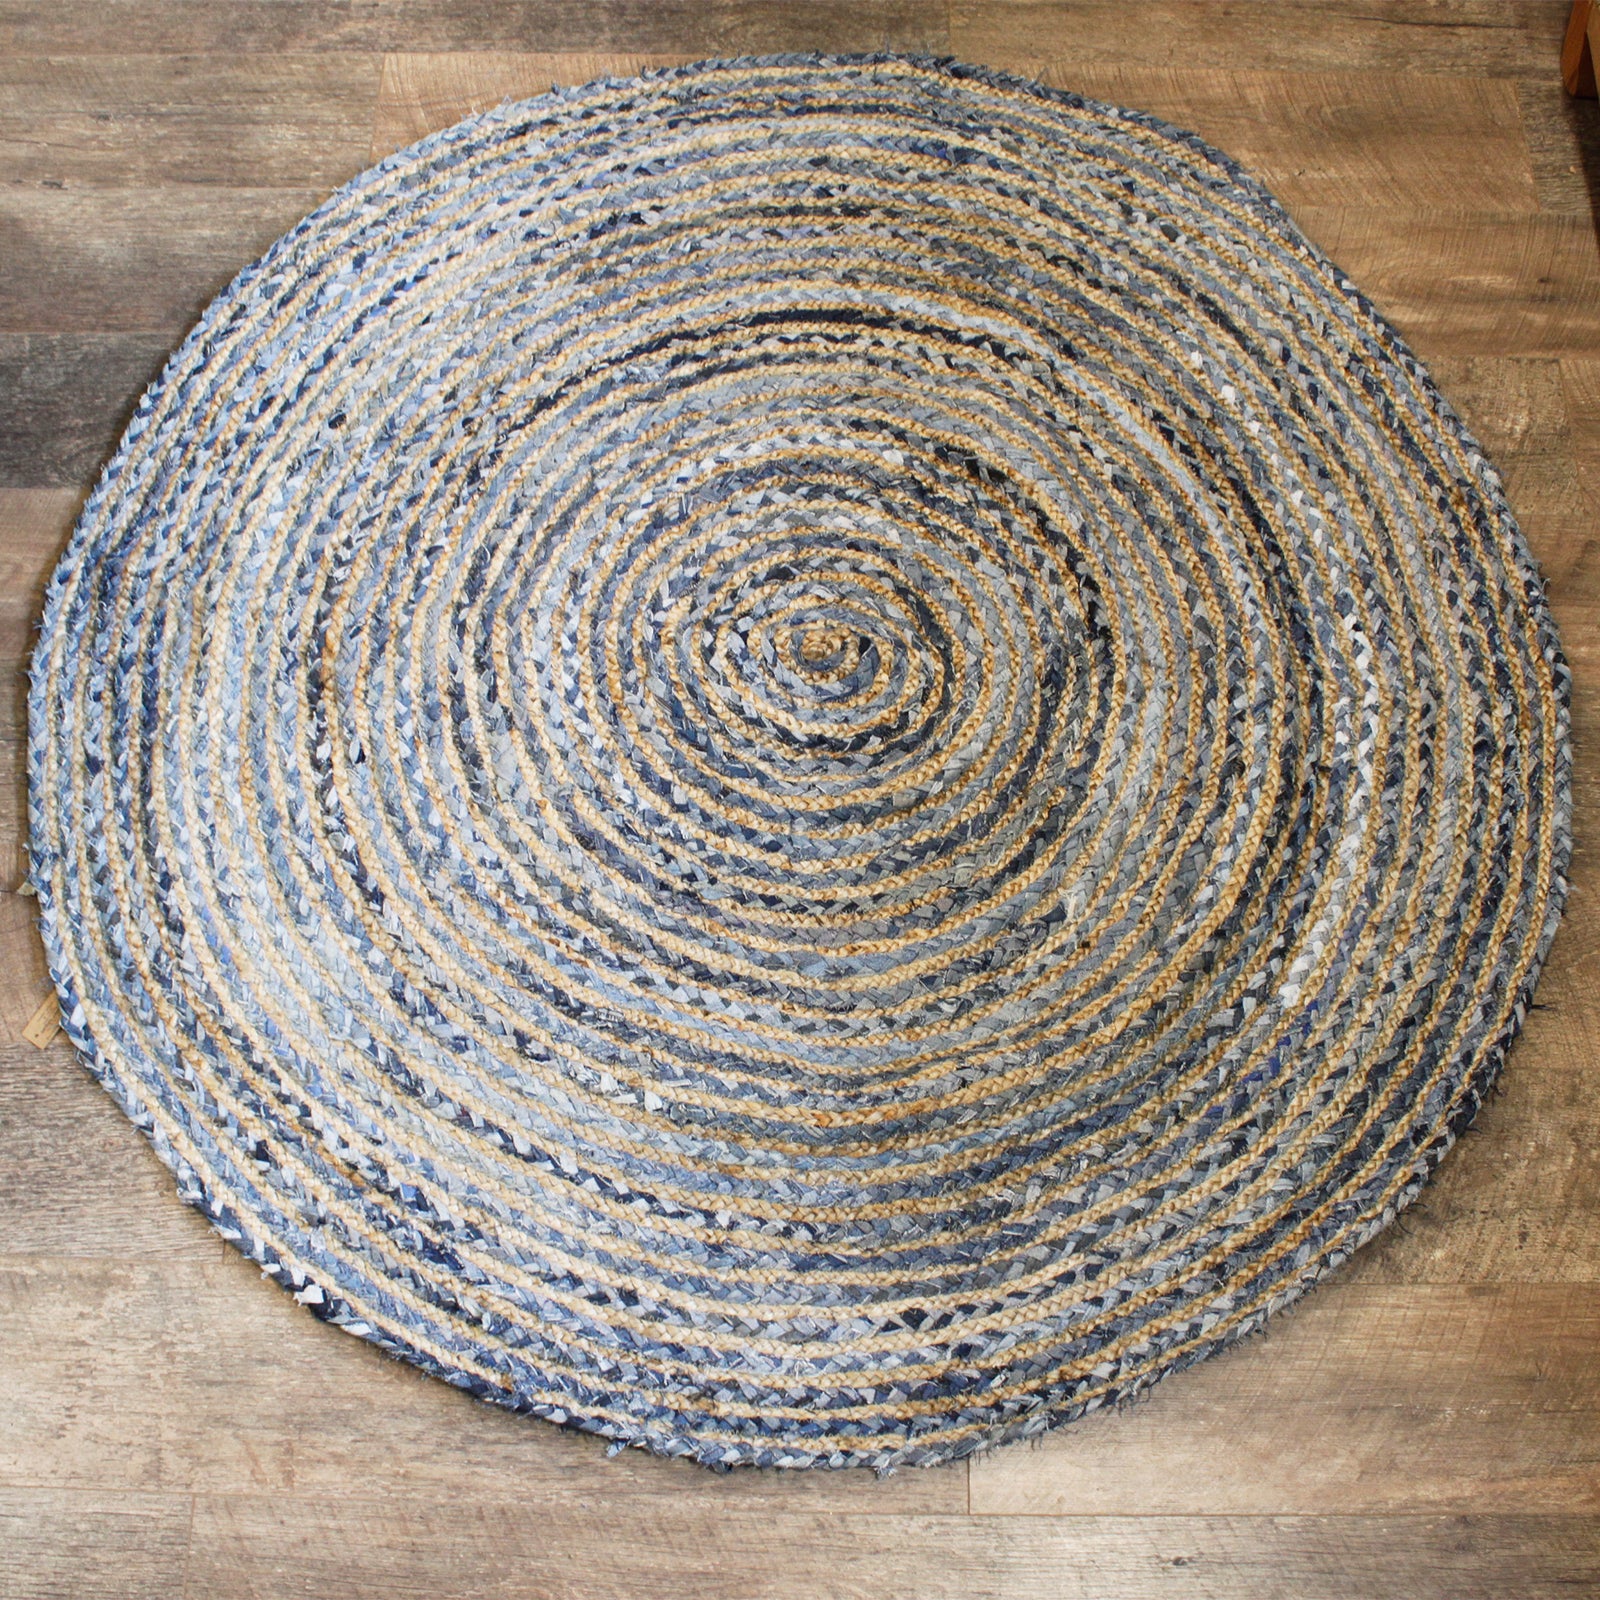 Round Rug Jute & Denim Mix Handmade Area Rug Rustic Look Living Room Carpet  | eBay